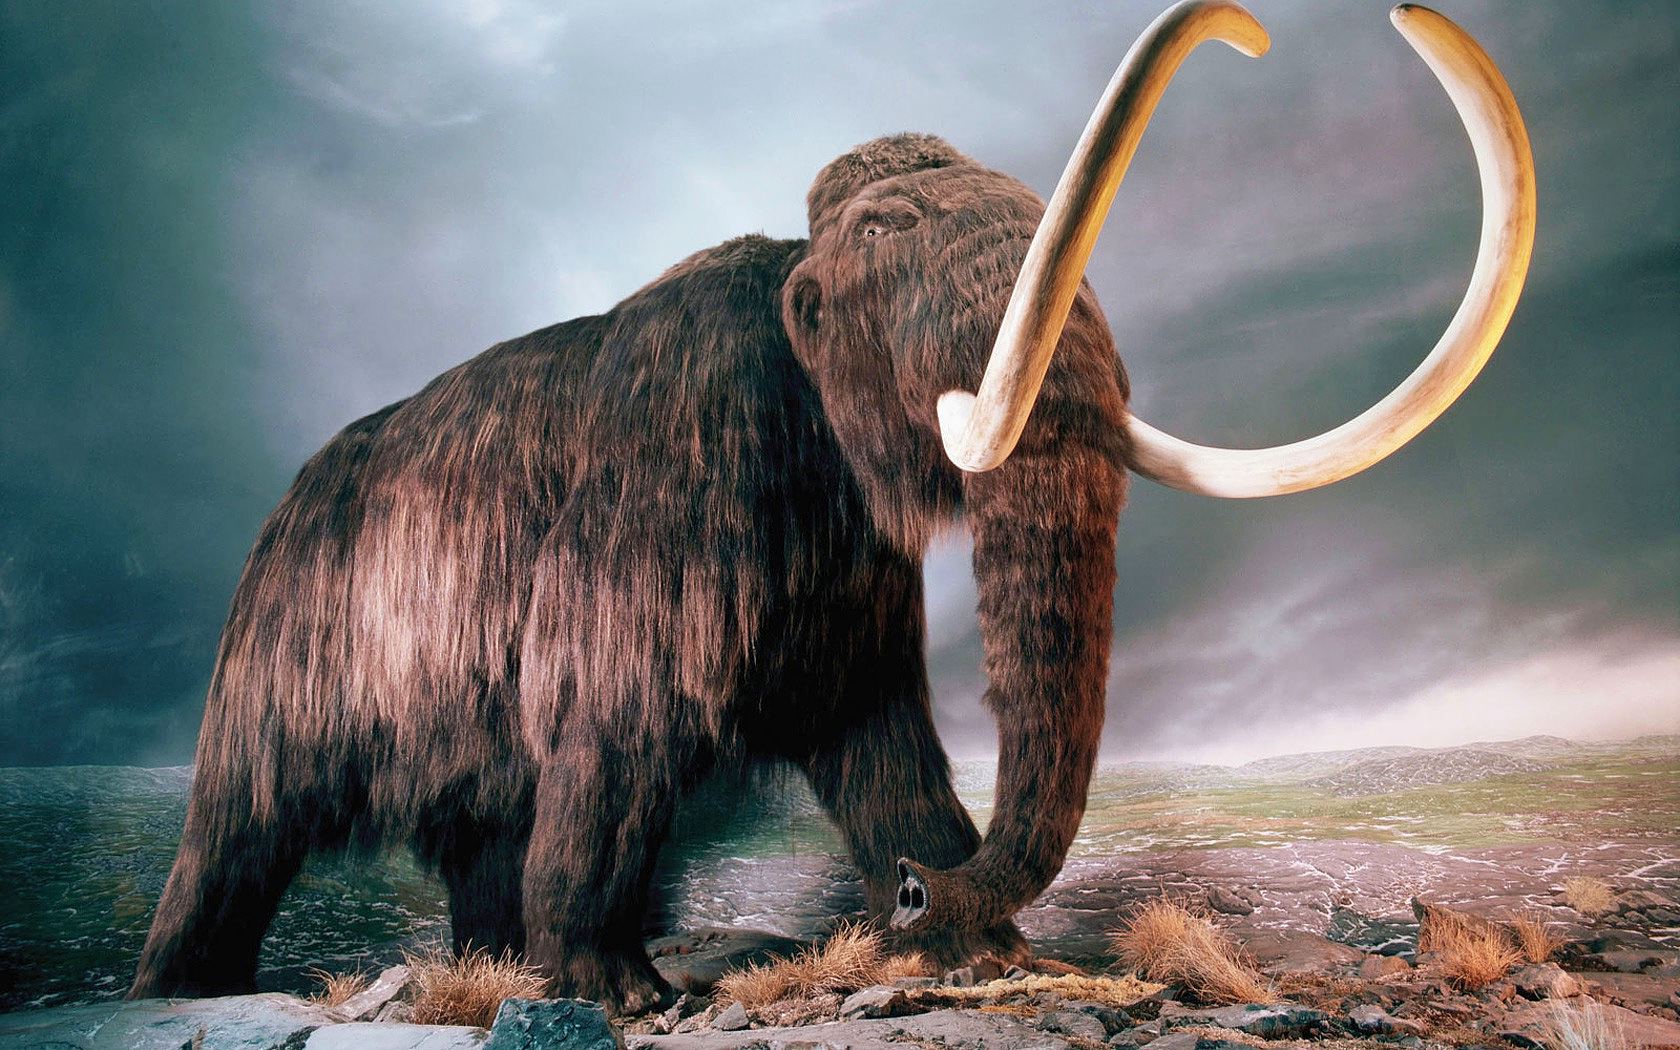 Mammoth dung, prehistoric goo may speed warming